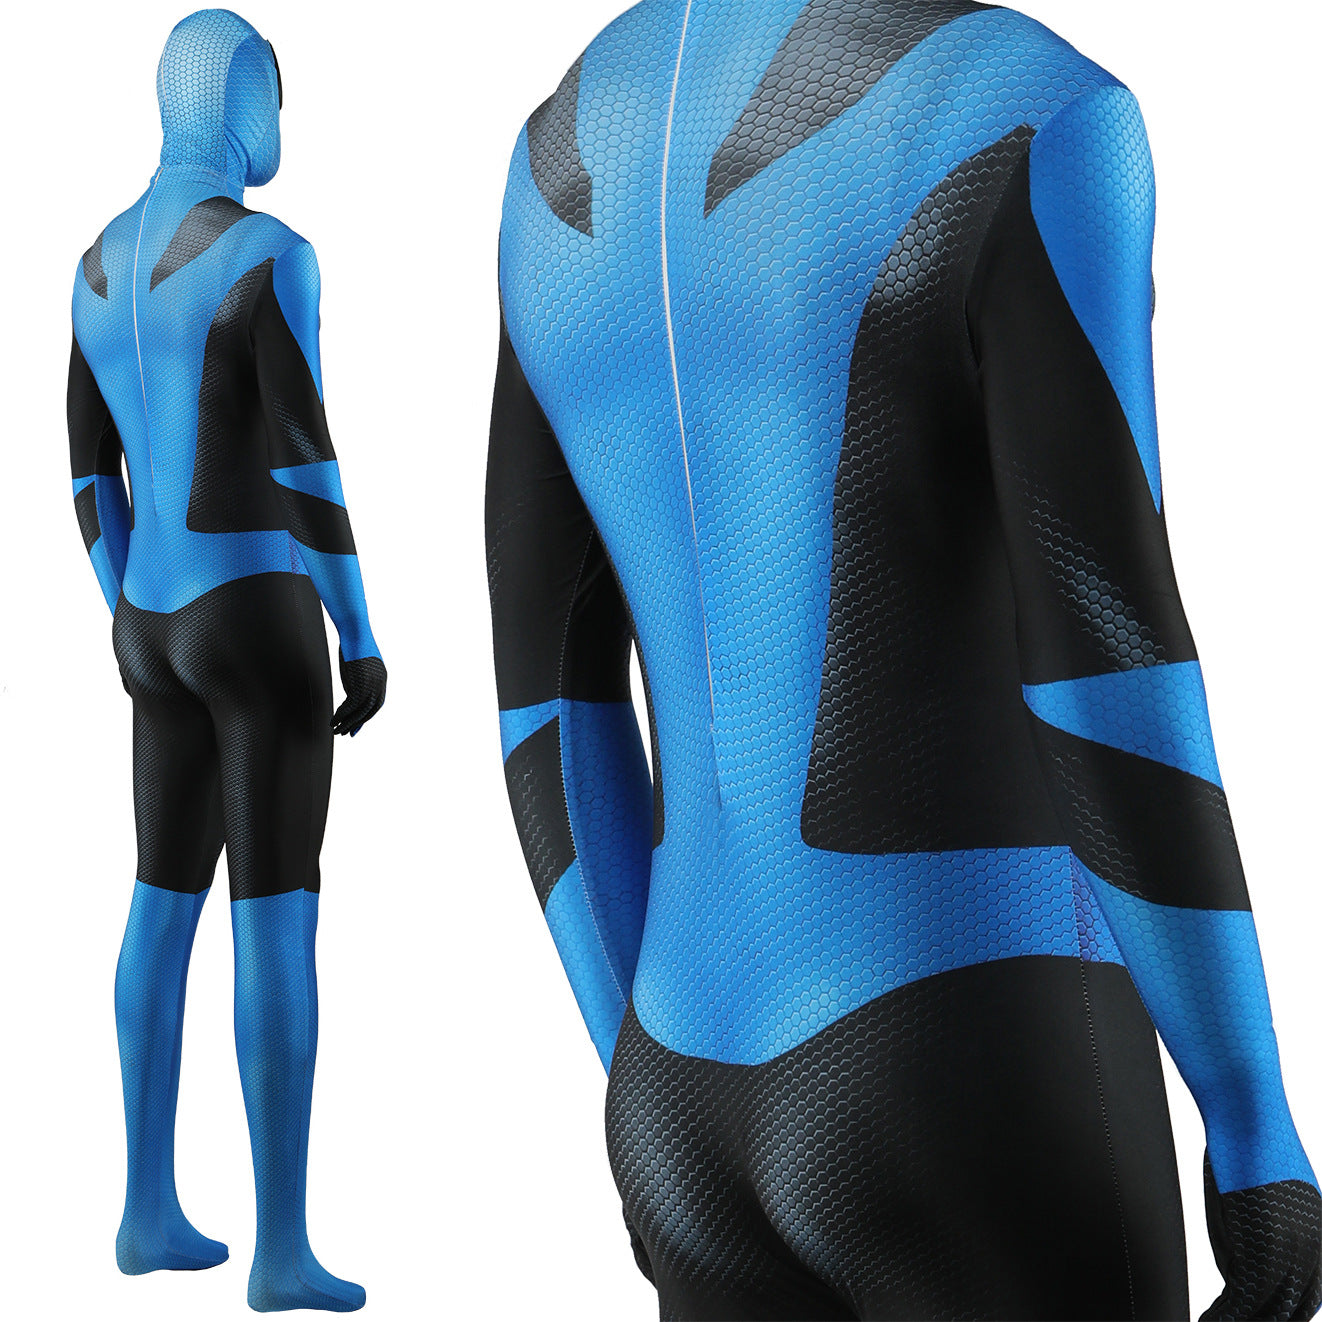 the blue lantern spider man jumpsuits cosplay costume kids adult halloween bodysuit